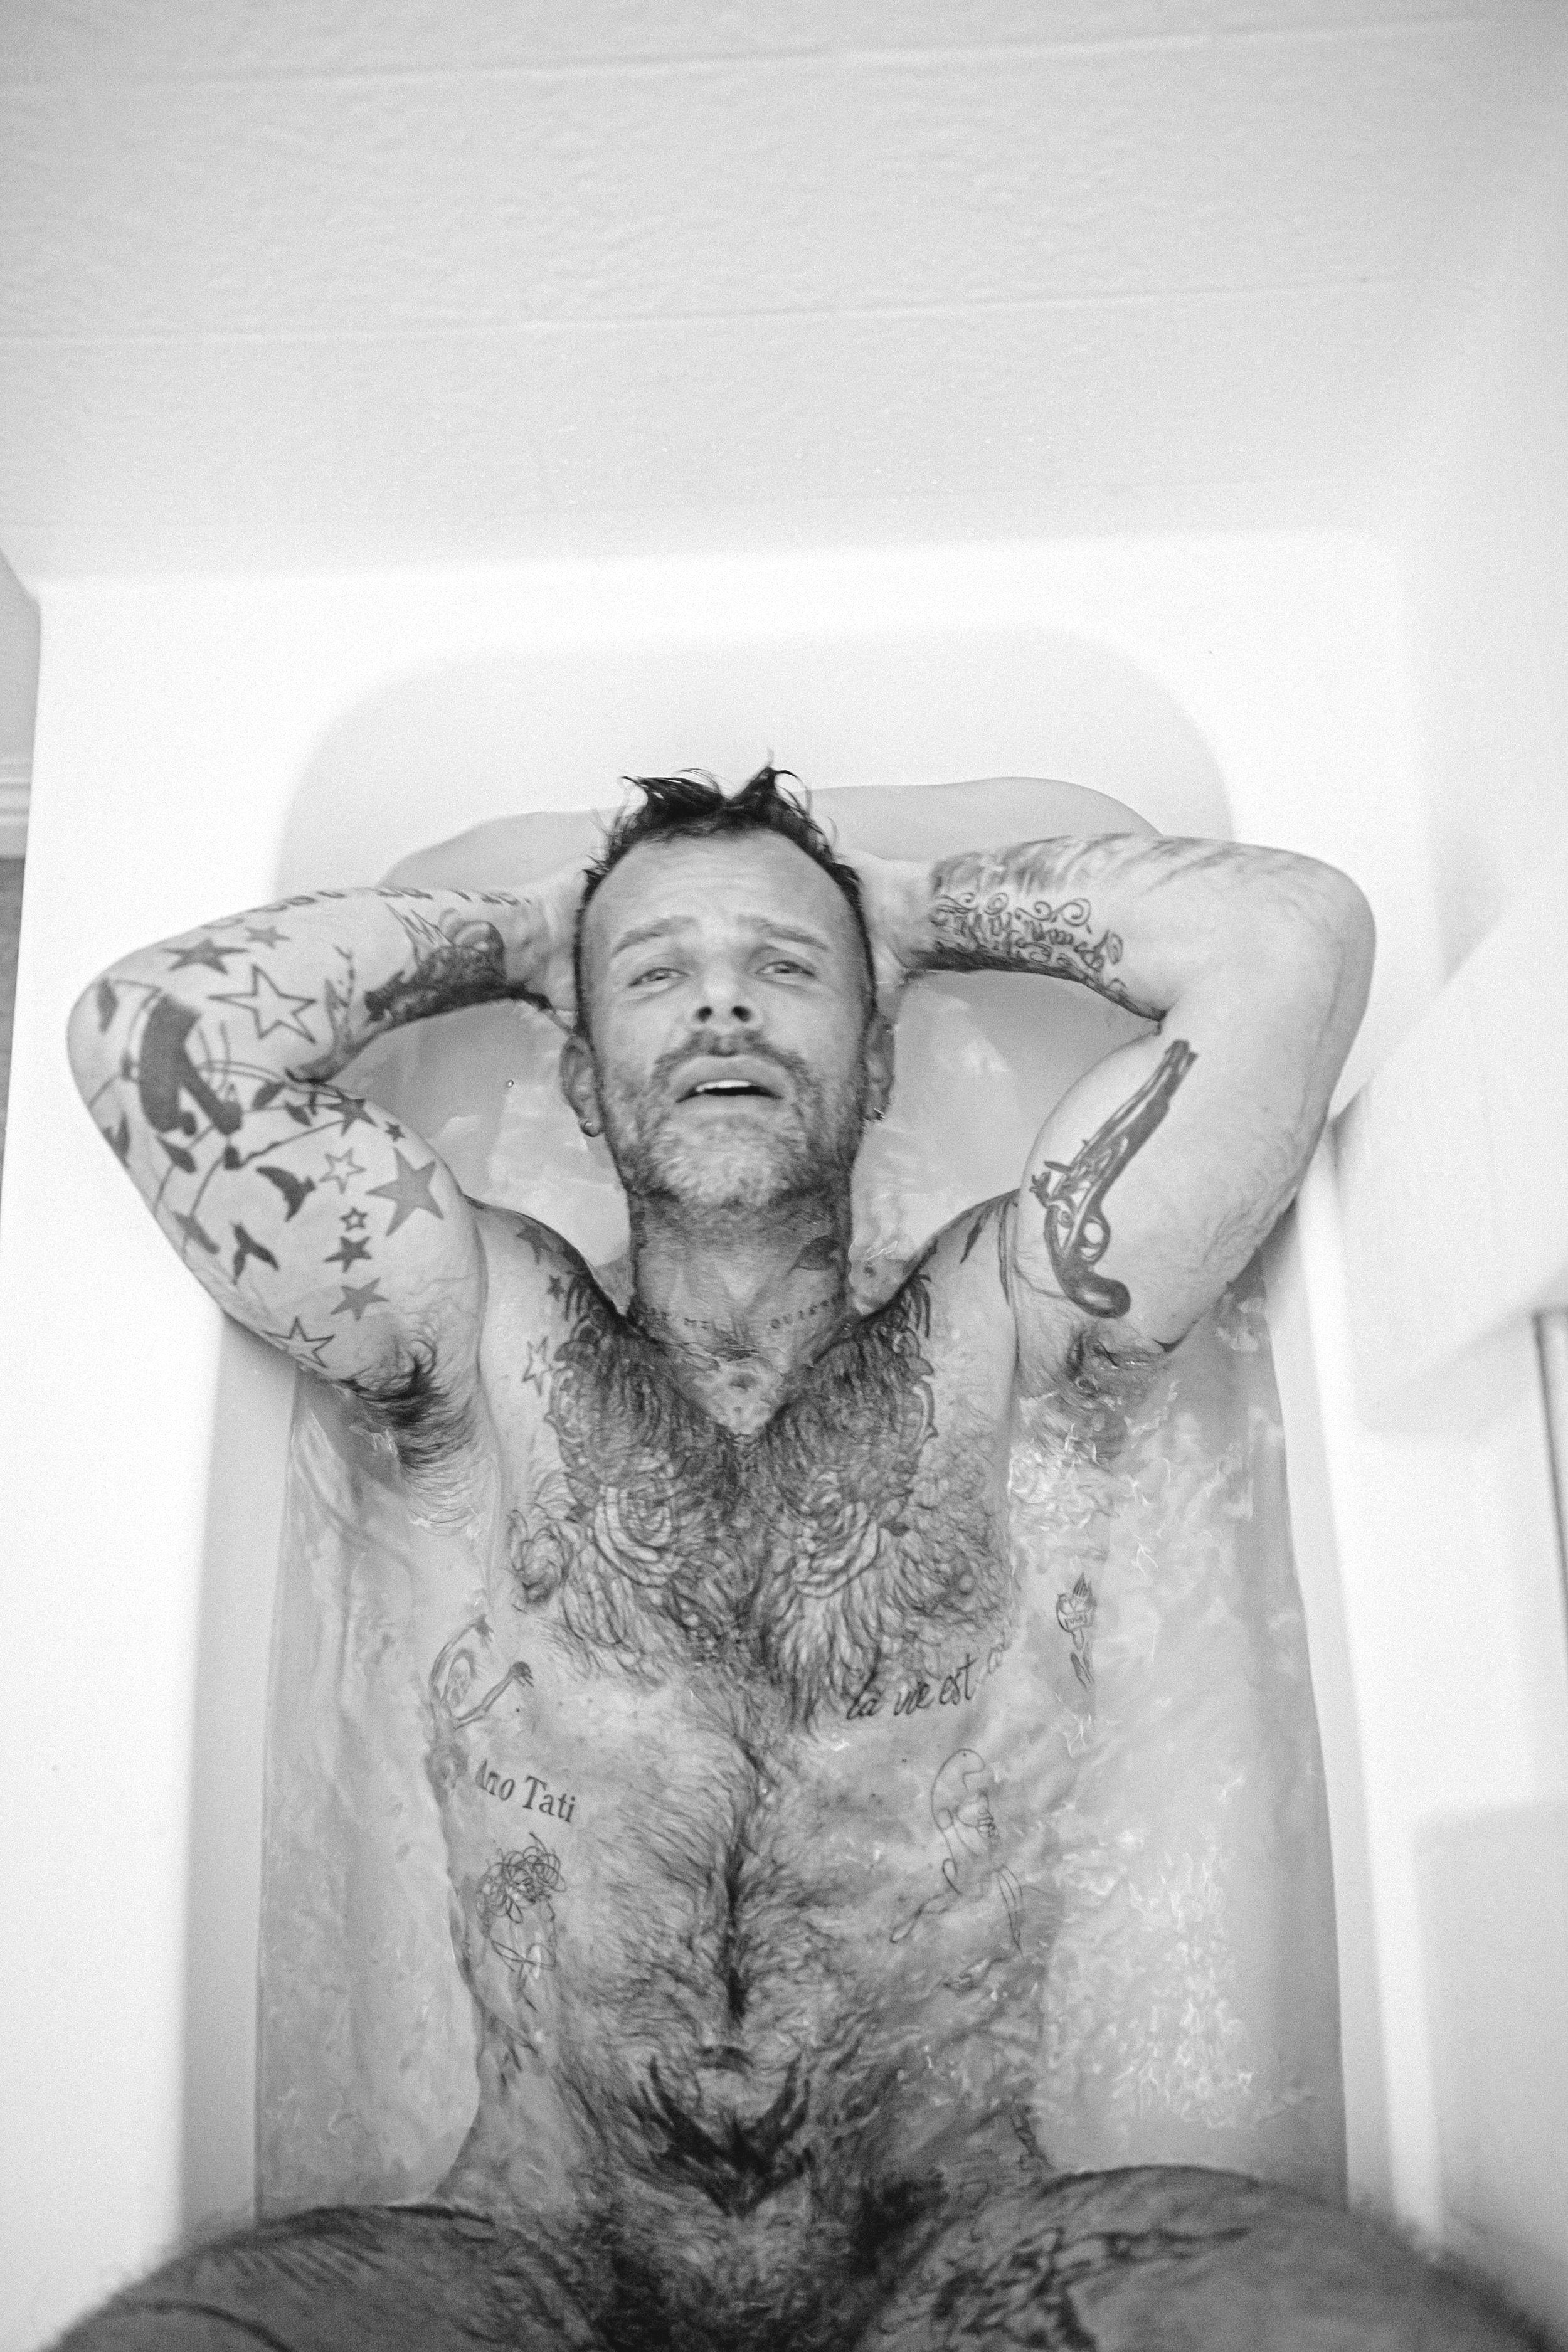 david tabaka share tub time with tate photos